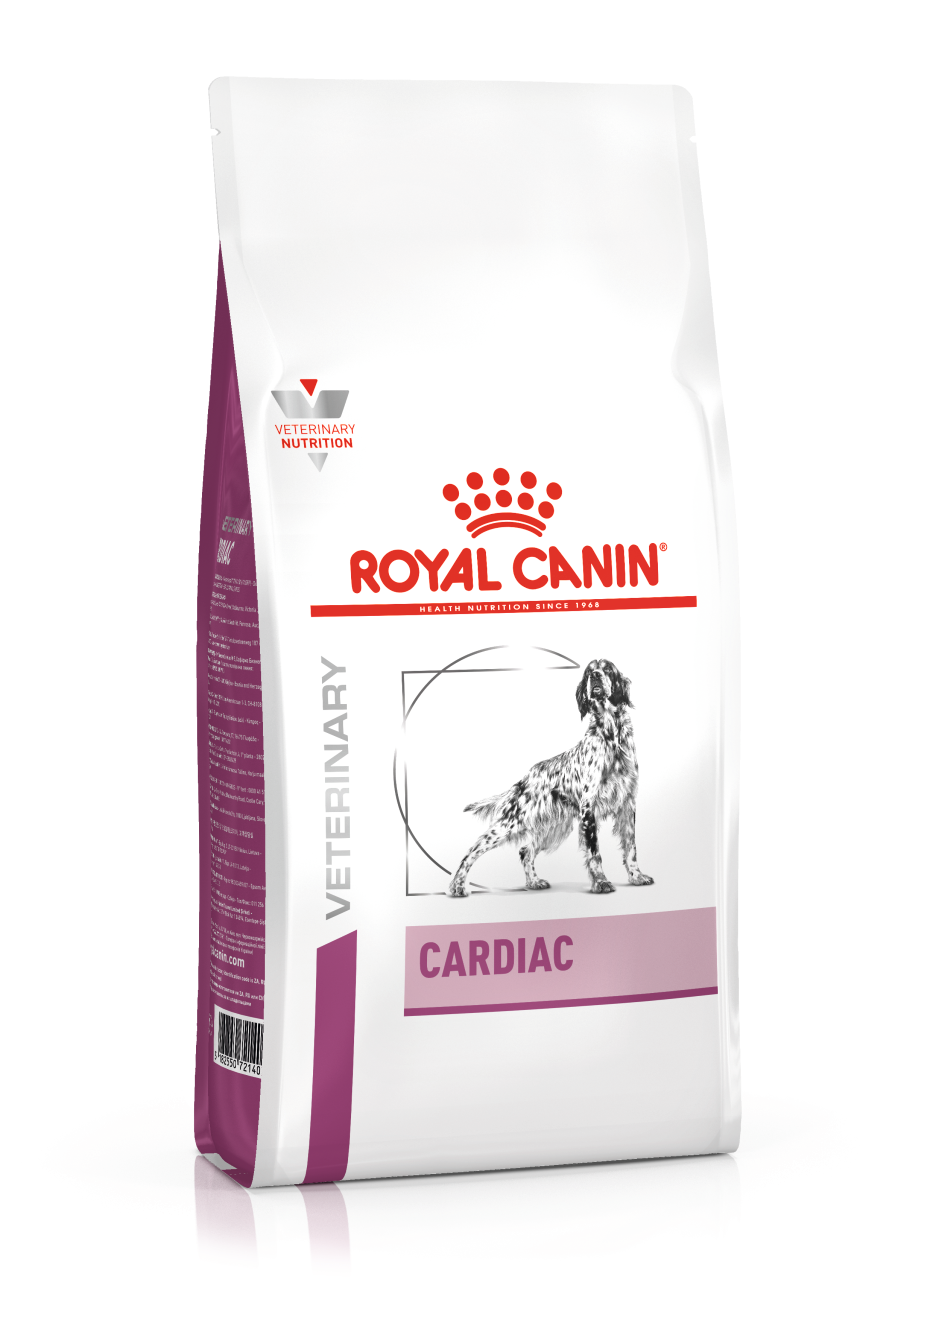 Royal Canin Cardiac dog <br>2 x 2 kg